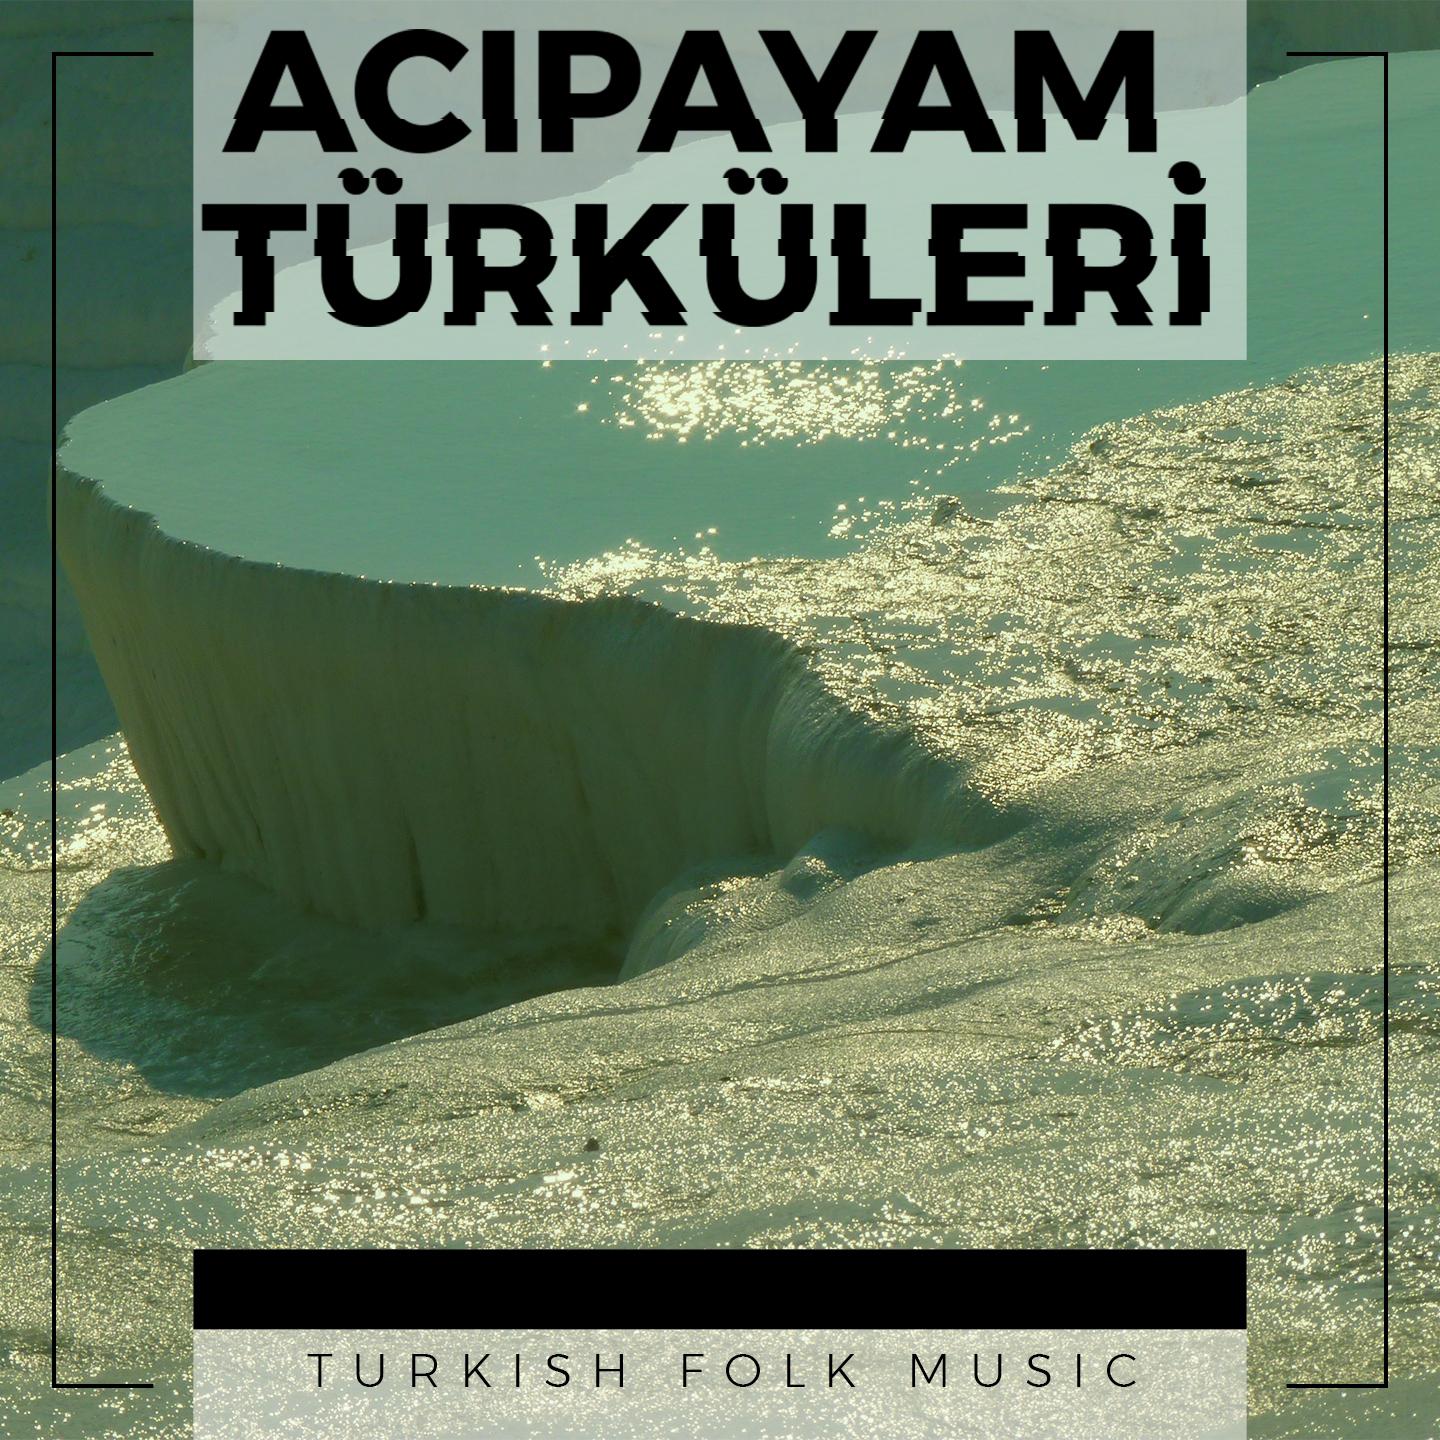 Ac payam Tü rkü leri Turkish Folk Music